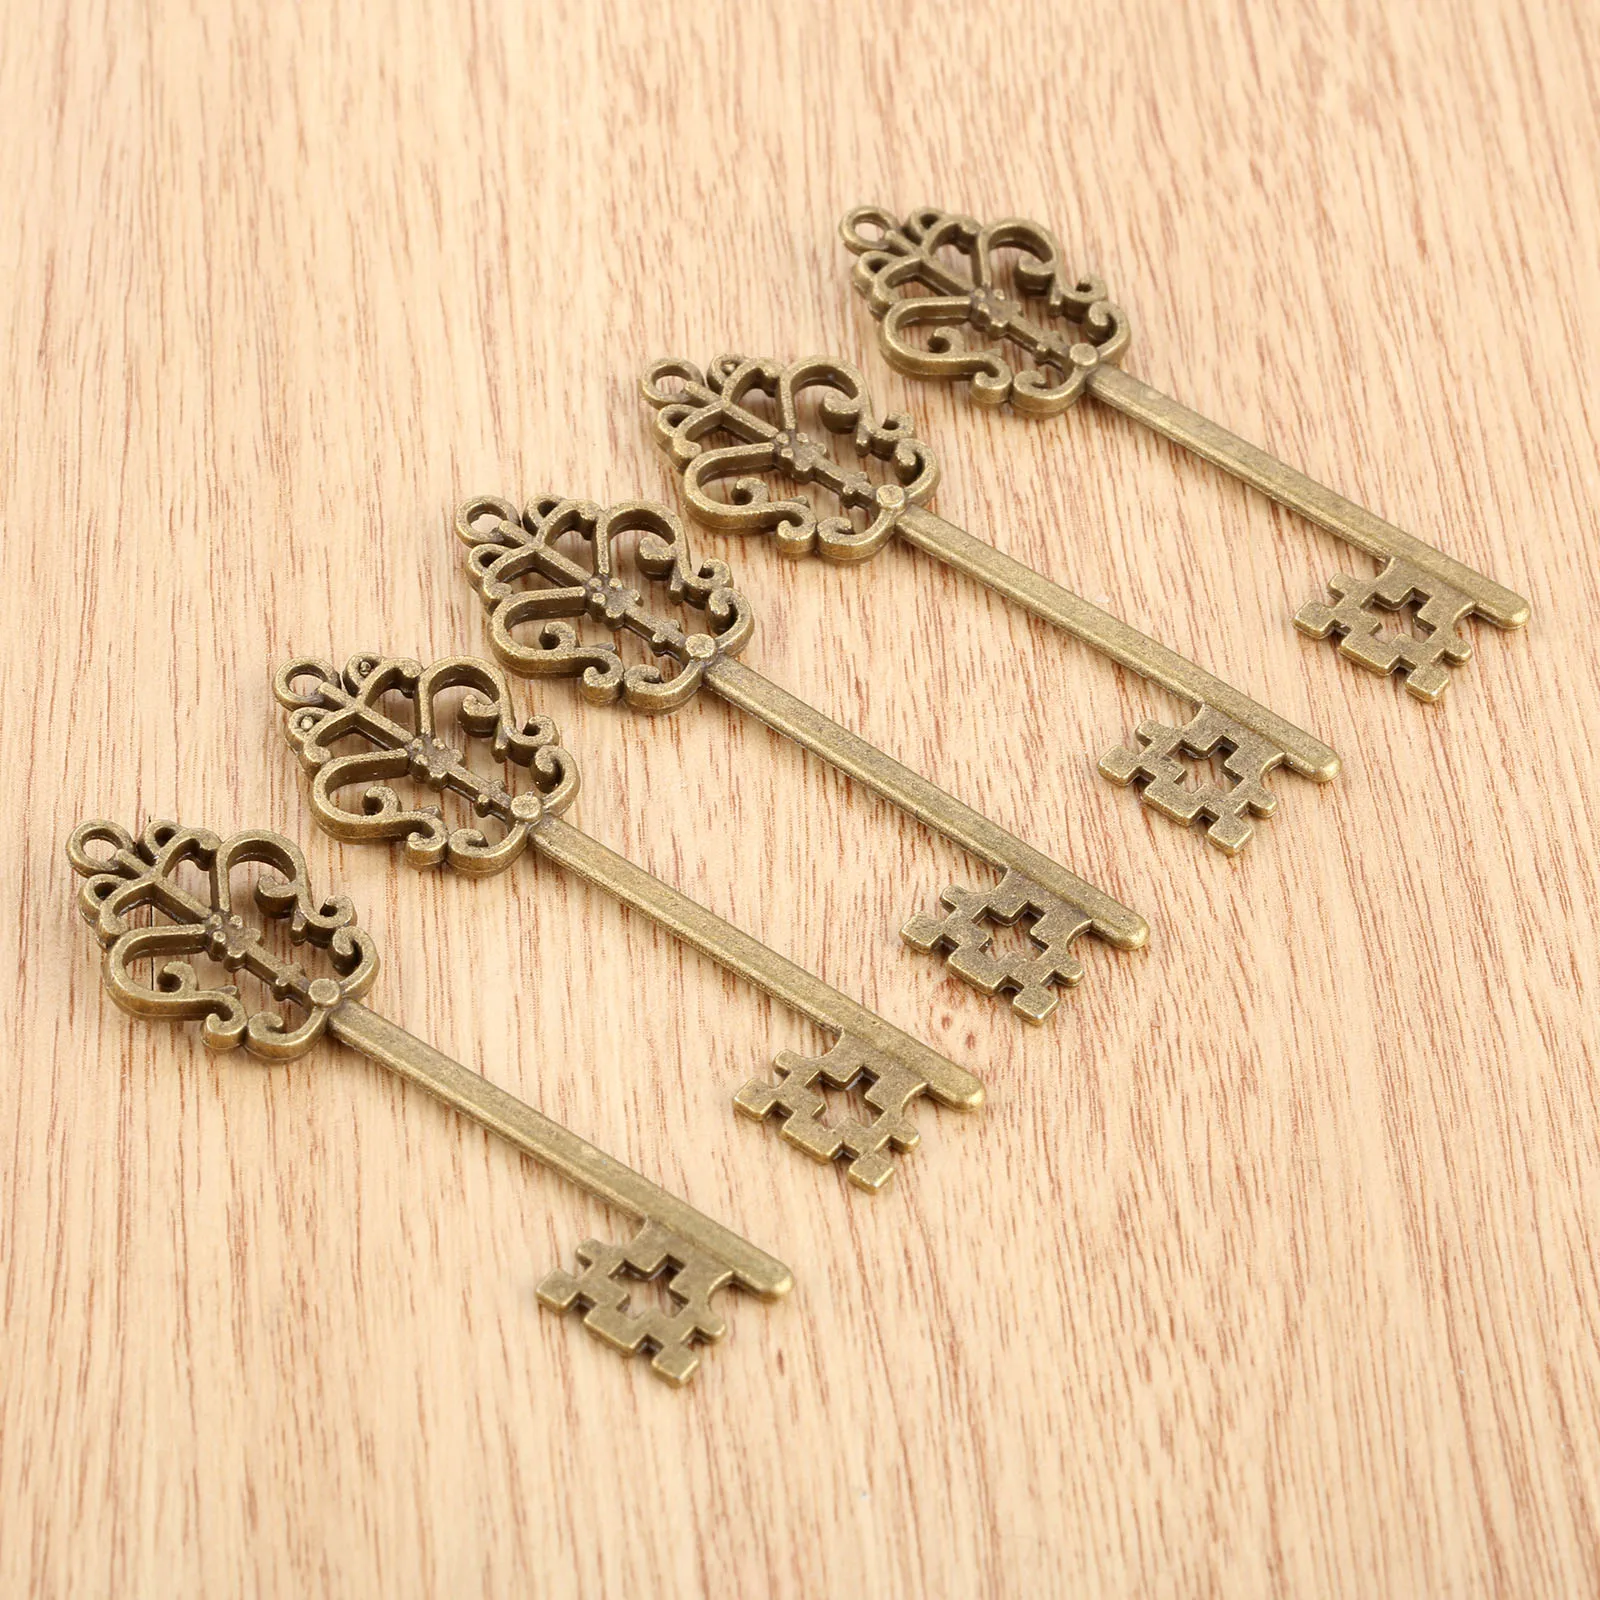 

5pcs 57*17mm Keys DIY Handmade Accessories Bronze Key Party Wedding Favors Supplies Key Charm Pendant